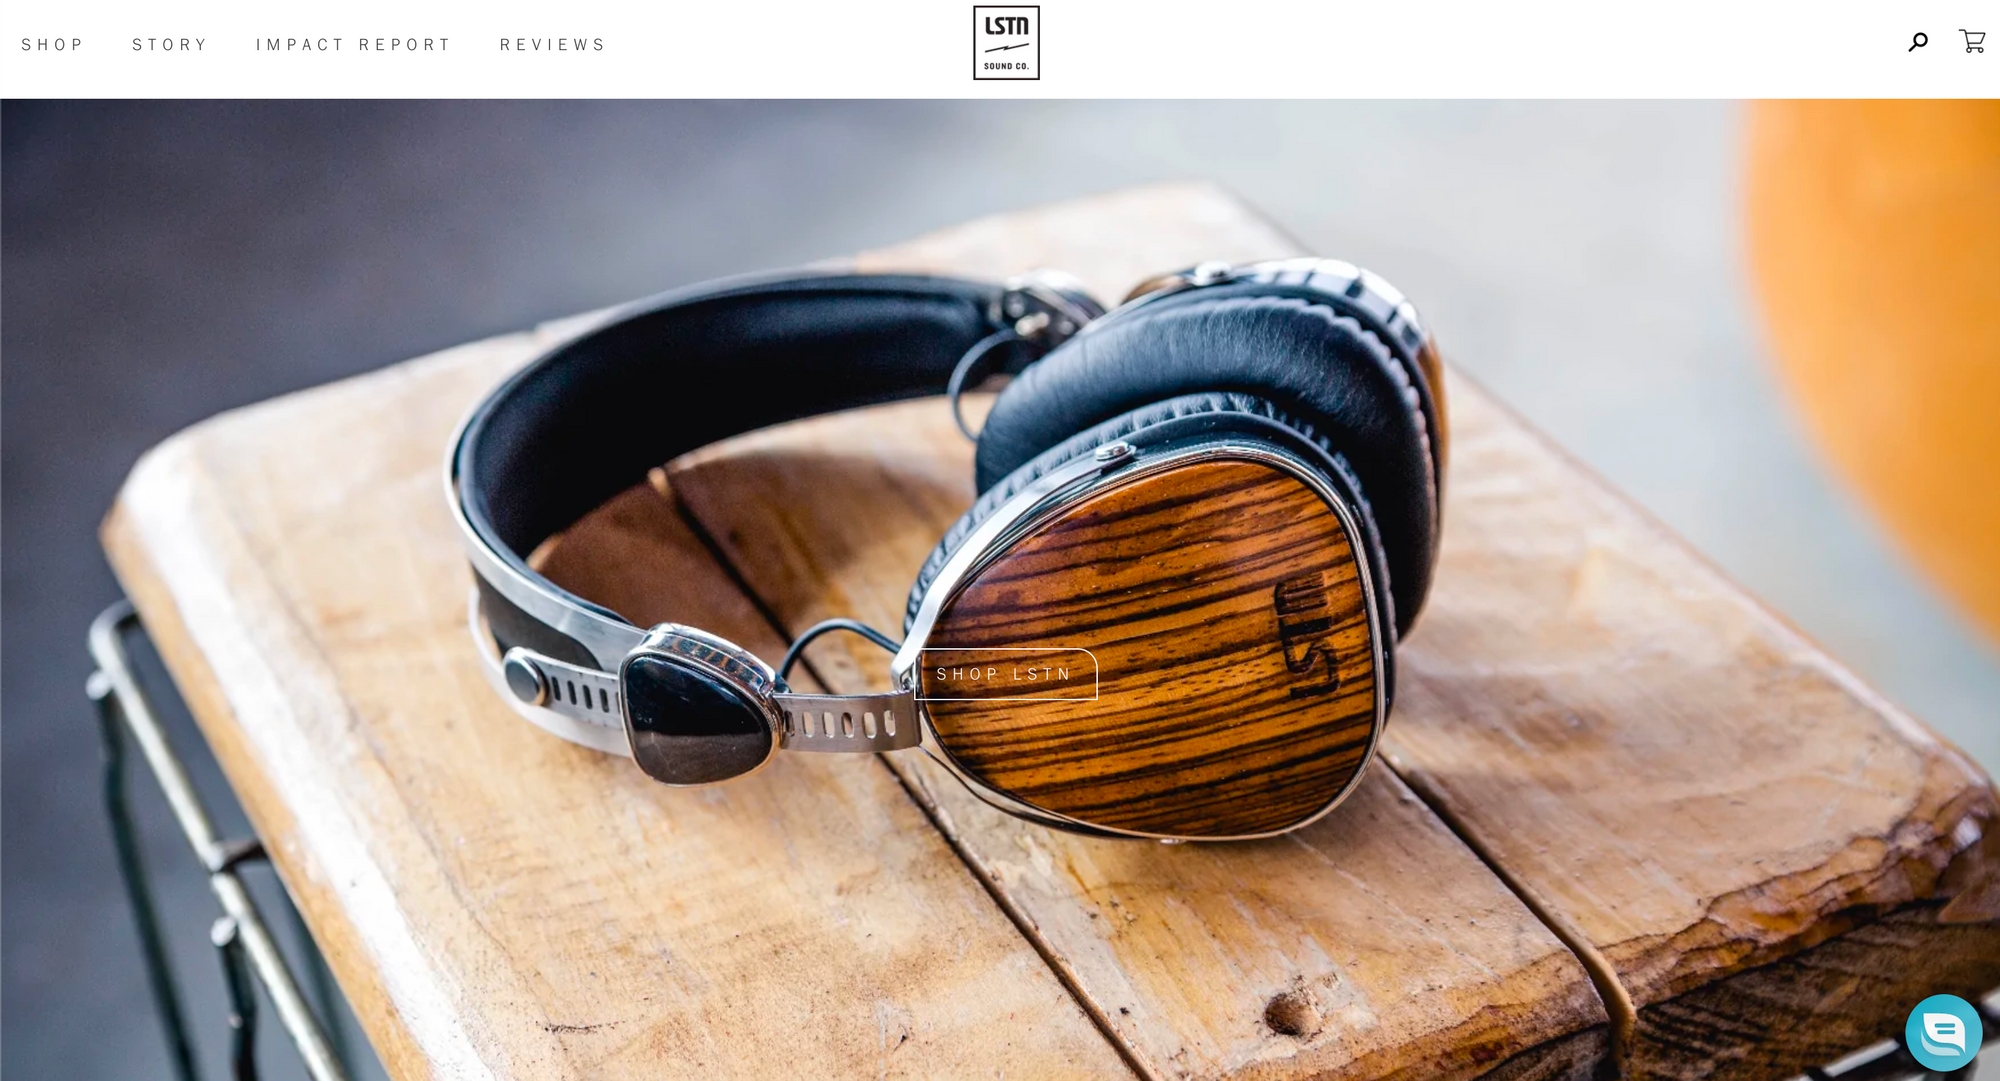 A screenshot of LSTN’s website showing its wooden headphones.